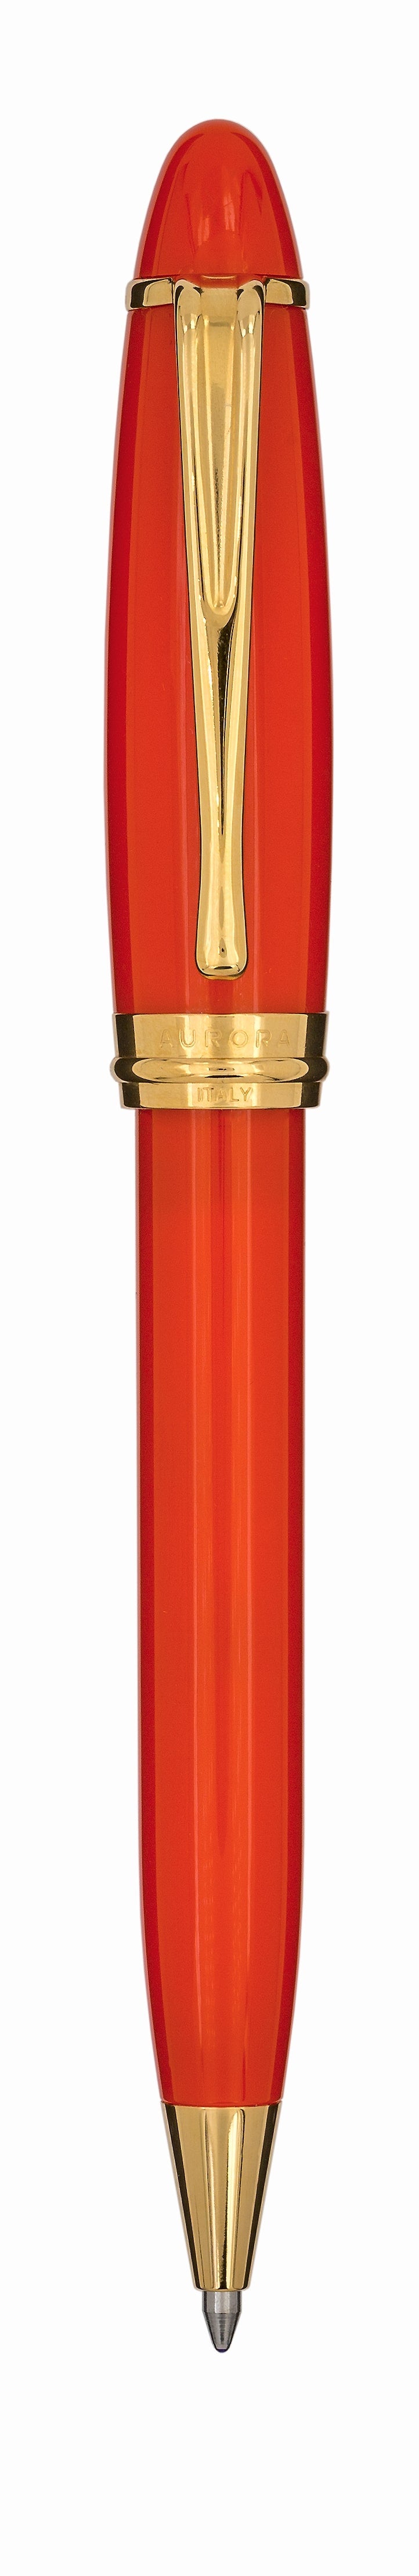 Aurora Ipsilon Resin Orange with Gold Trims Ballpoint Pen